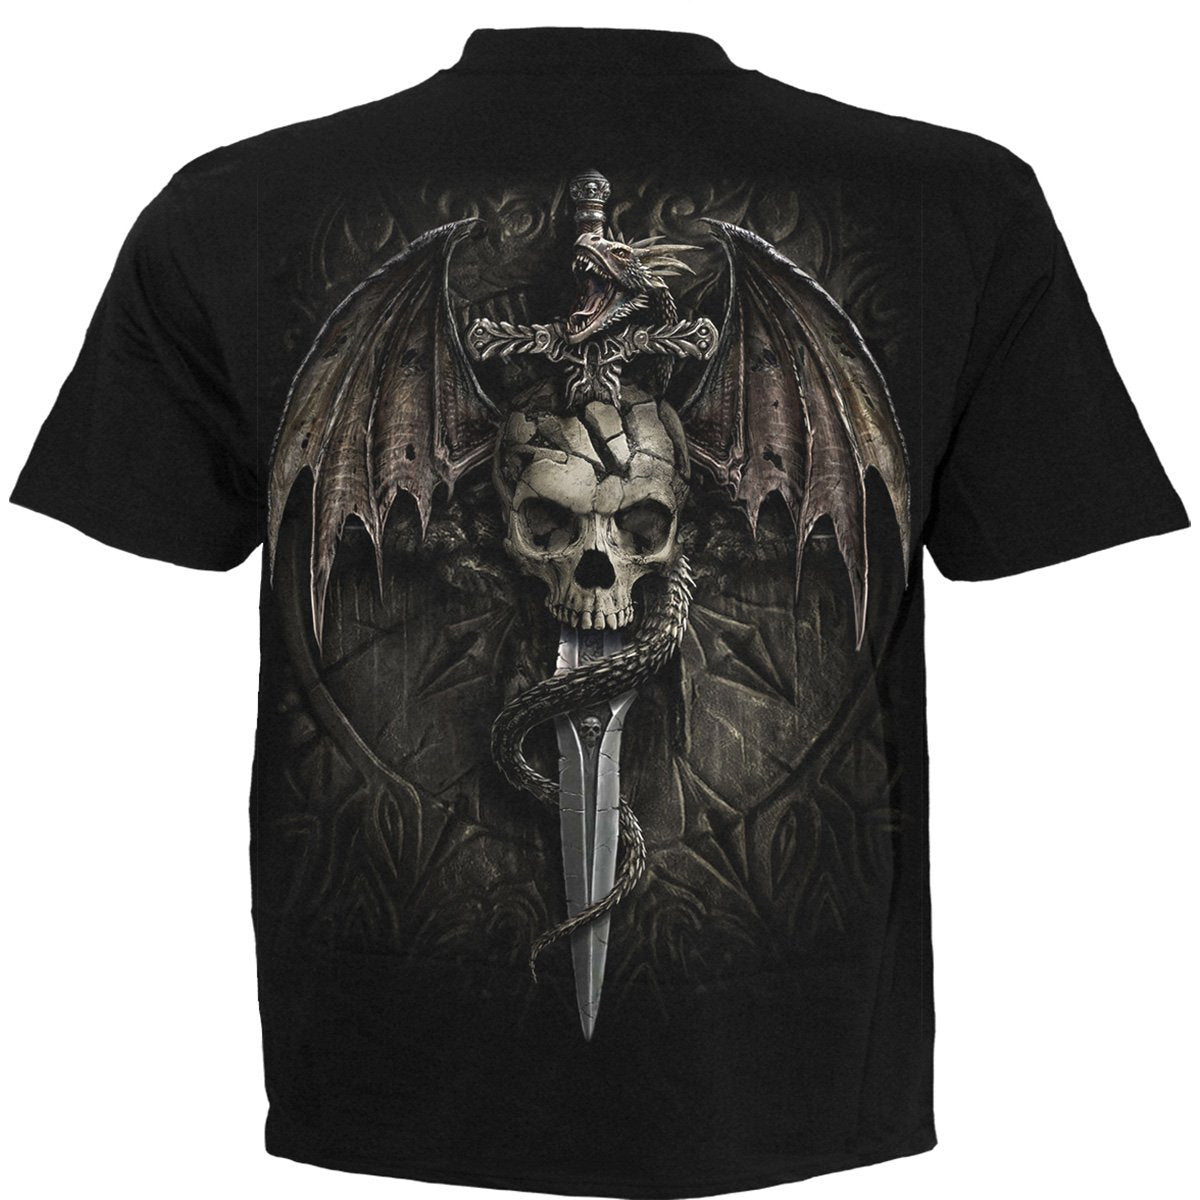 DRACO SKULL - T-Shirt Black - Spiral USA